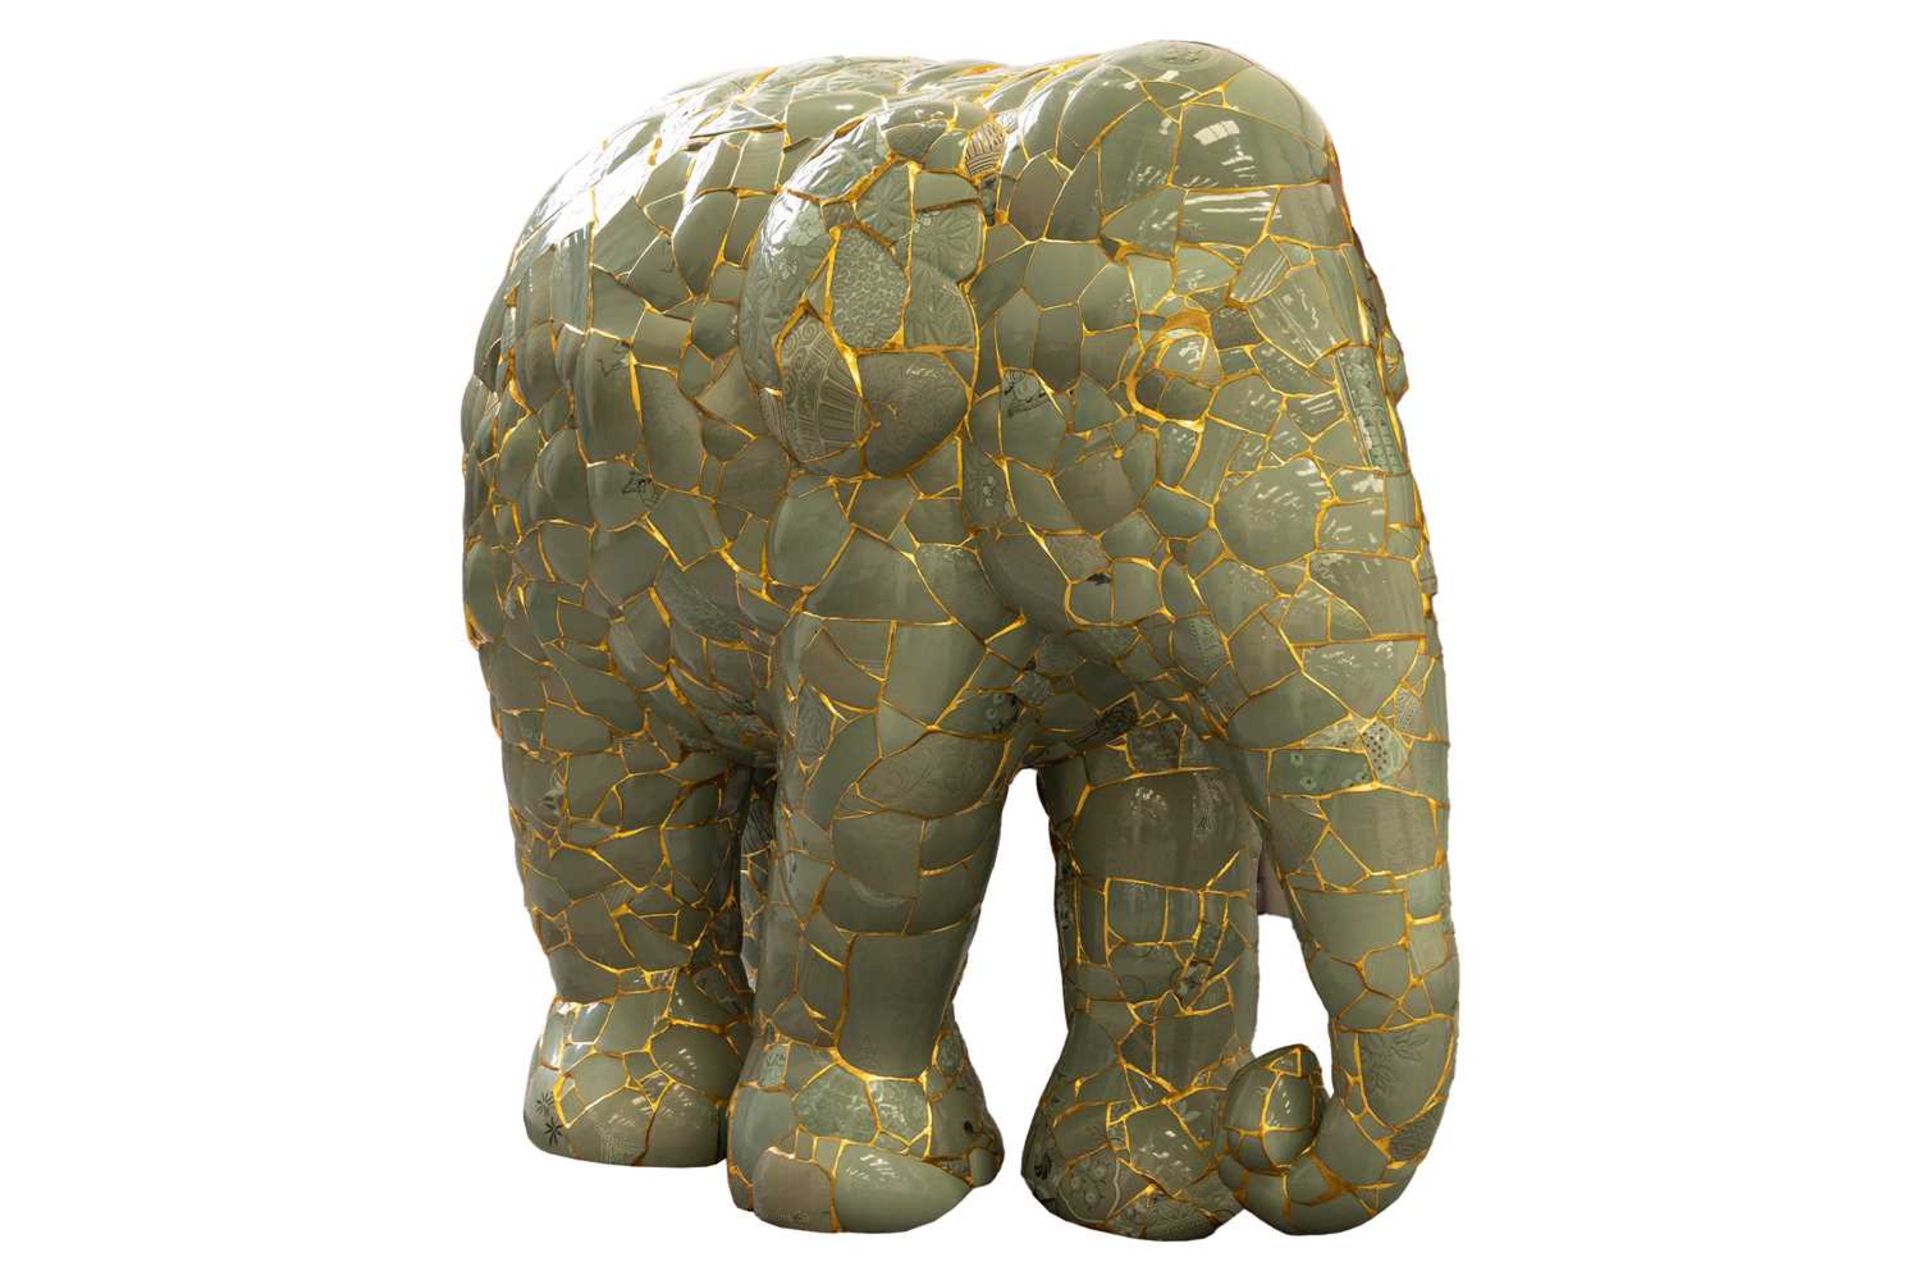 Yeesookyung (b. 1963) South Korean, 'Translated Vase Baby Elephant' (2012), celadon ceramic pieces f - Bild 2 aus 16